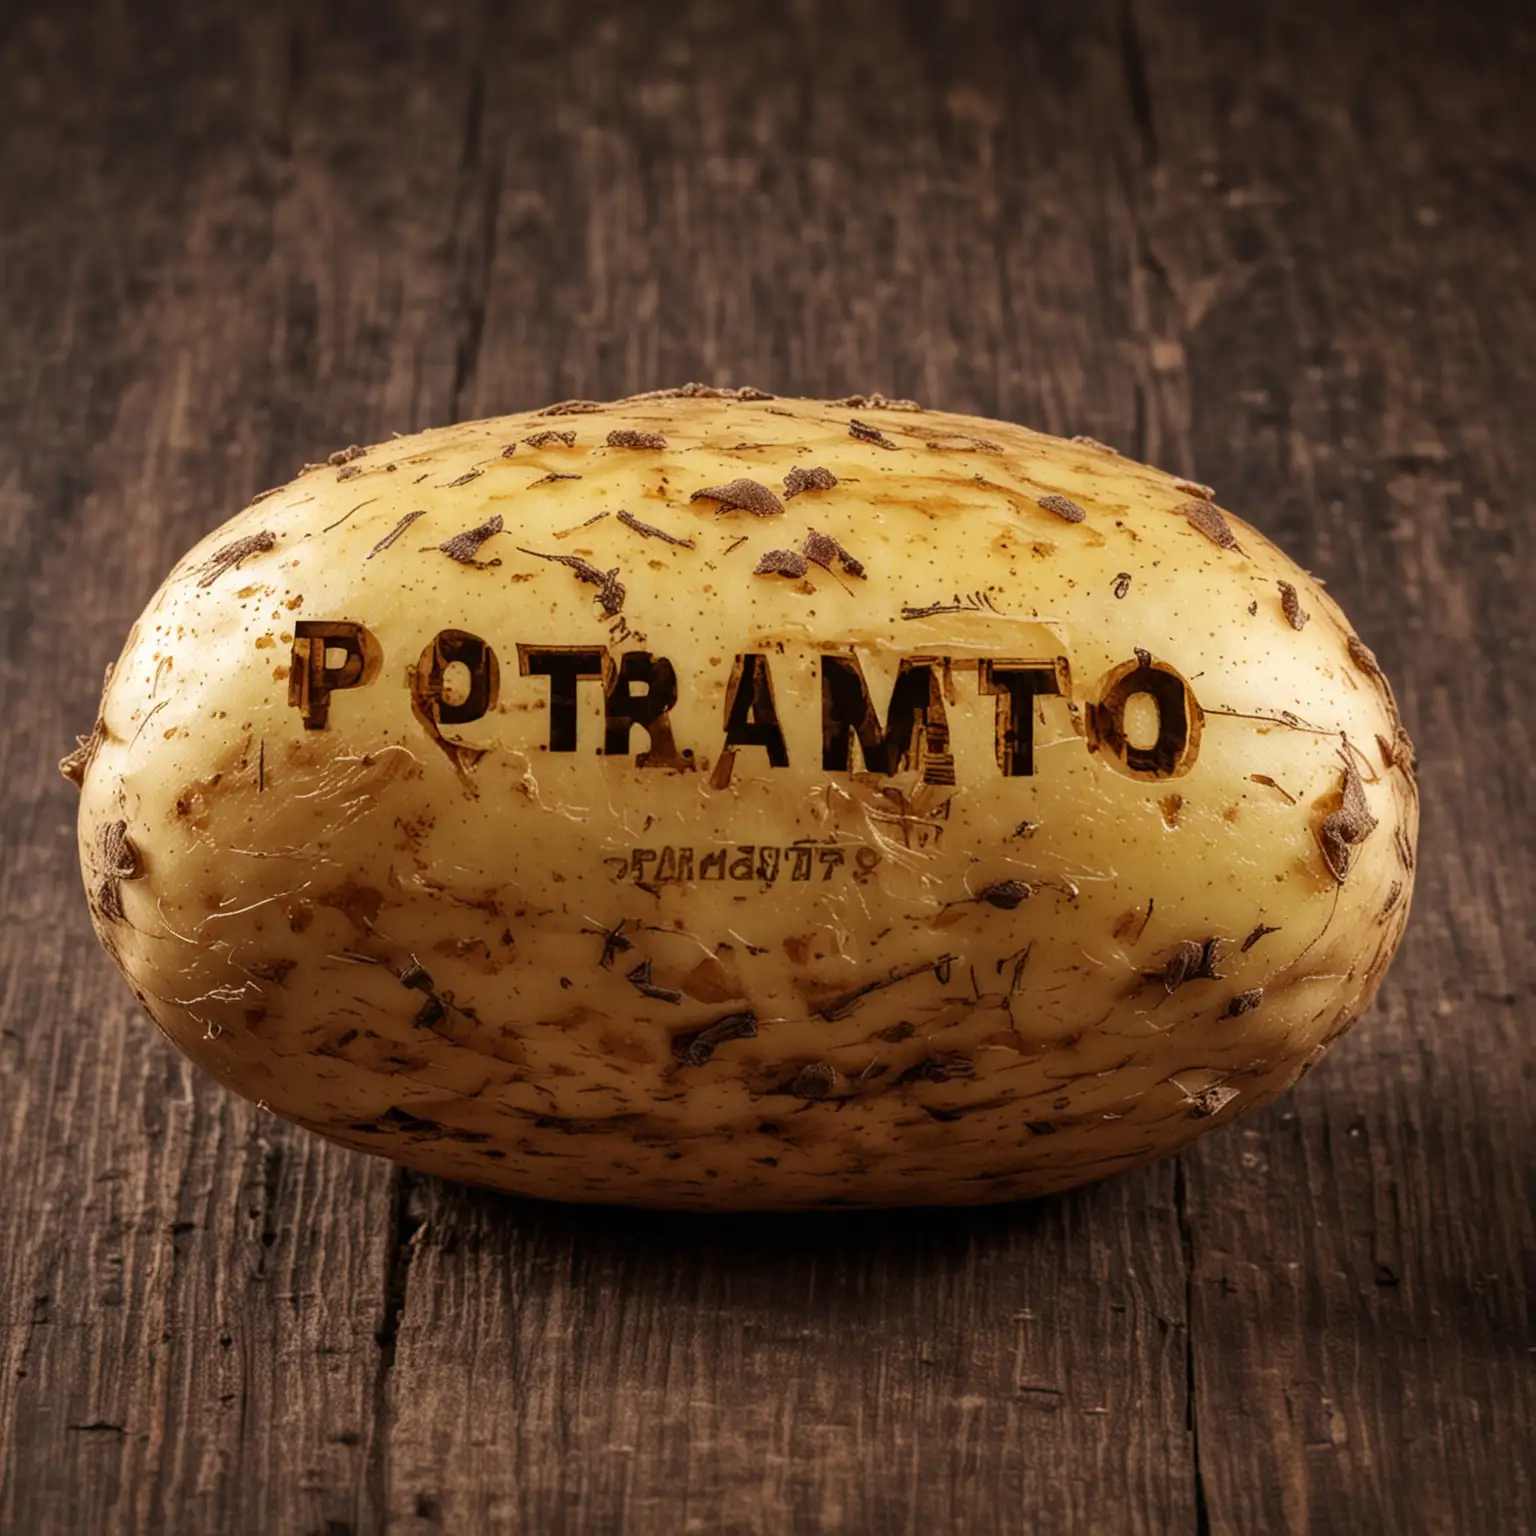 Potato programming